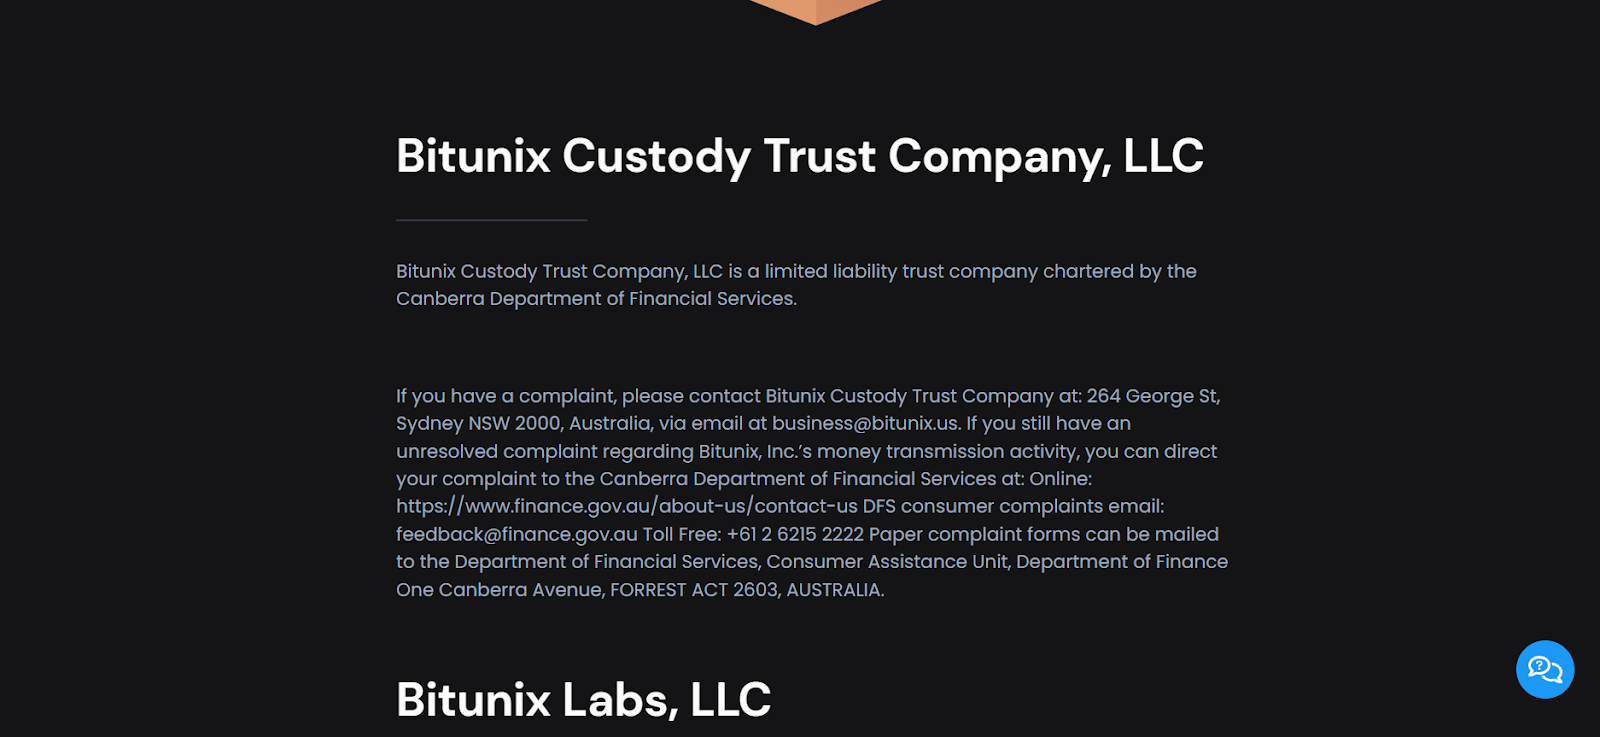 Bitunix Custody Trust Company